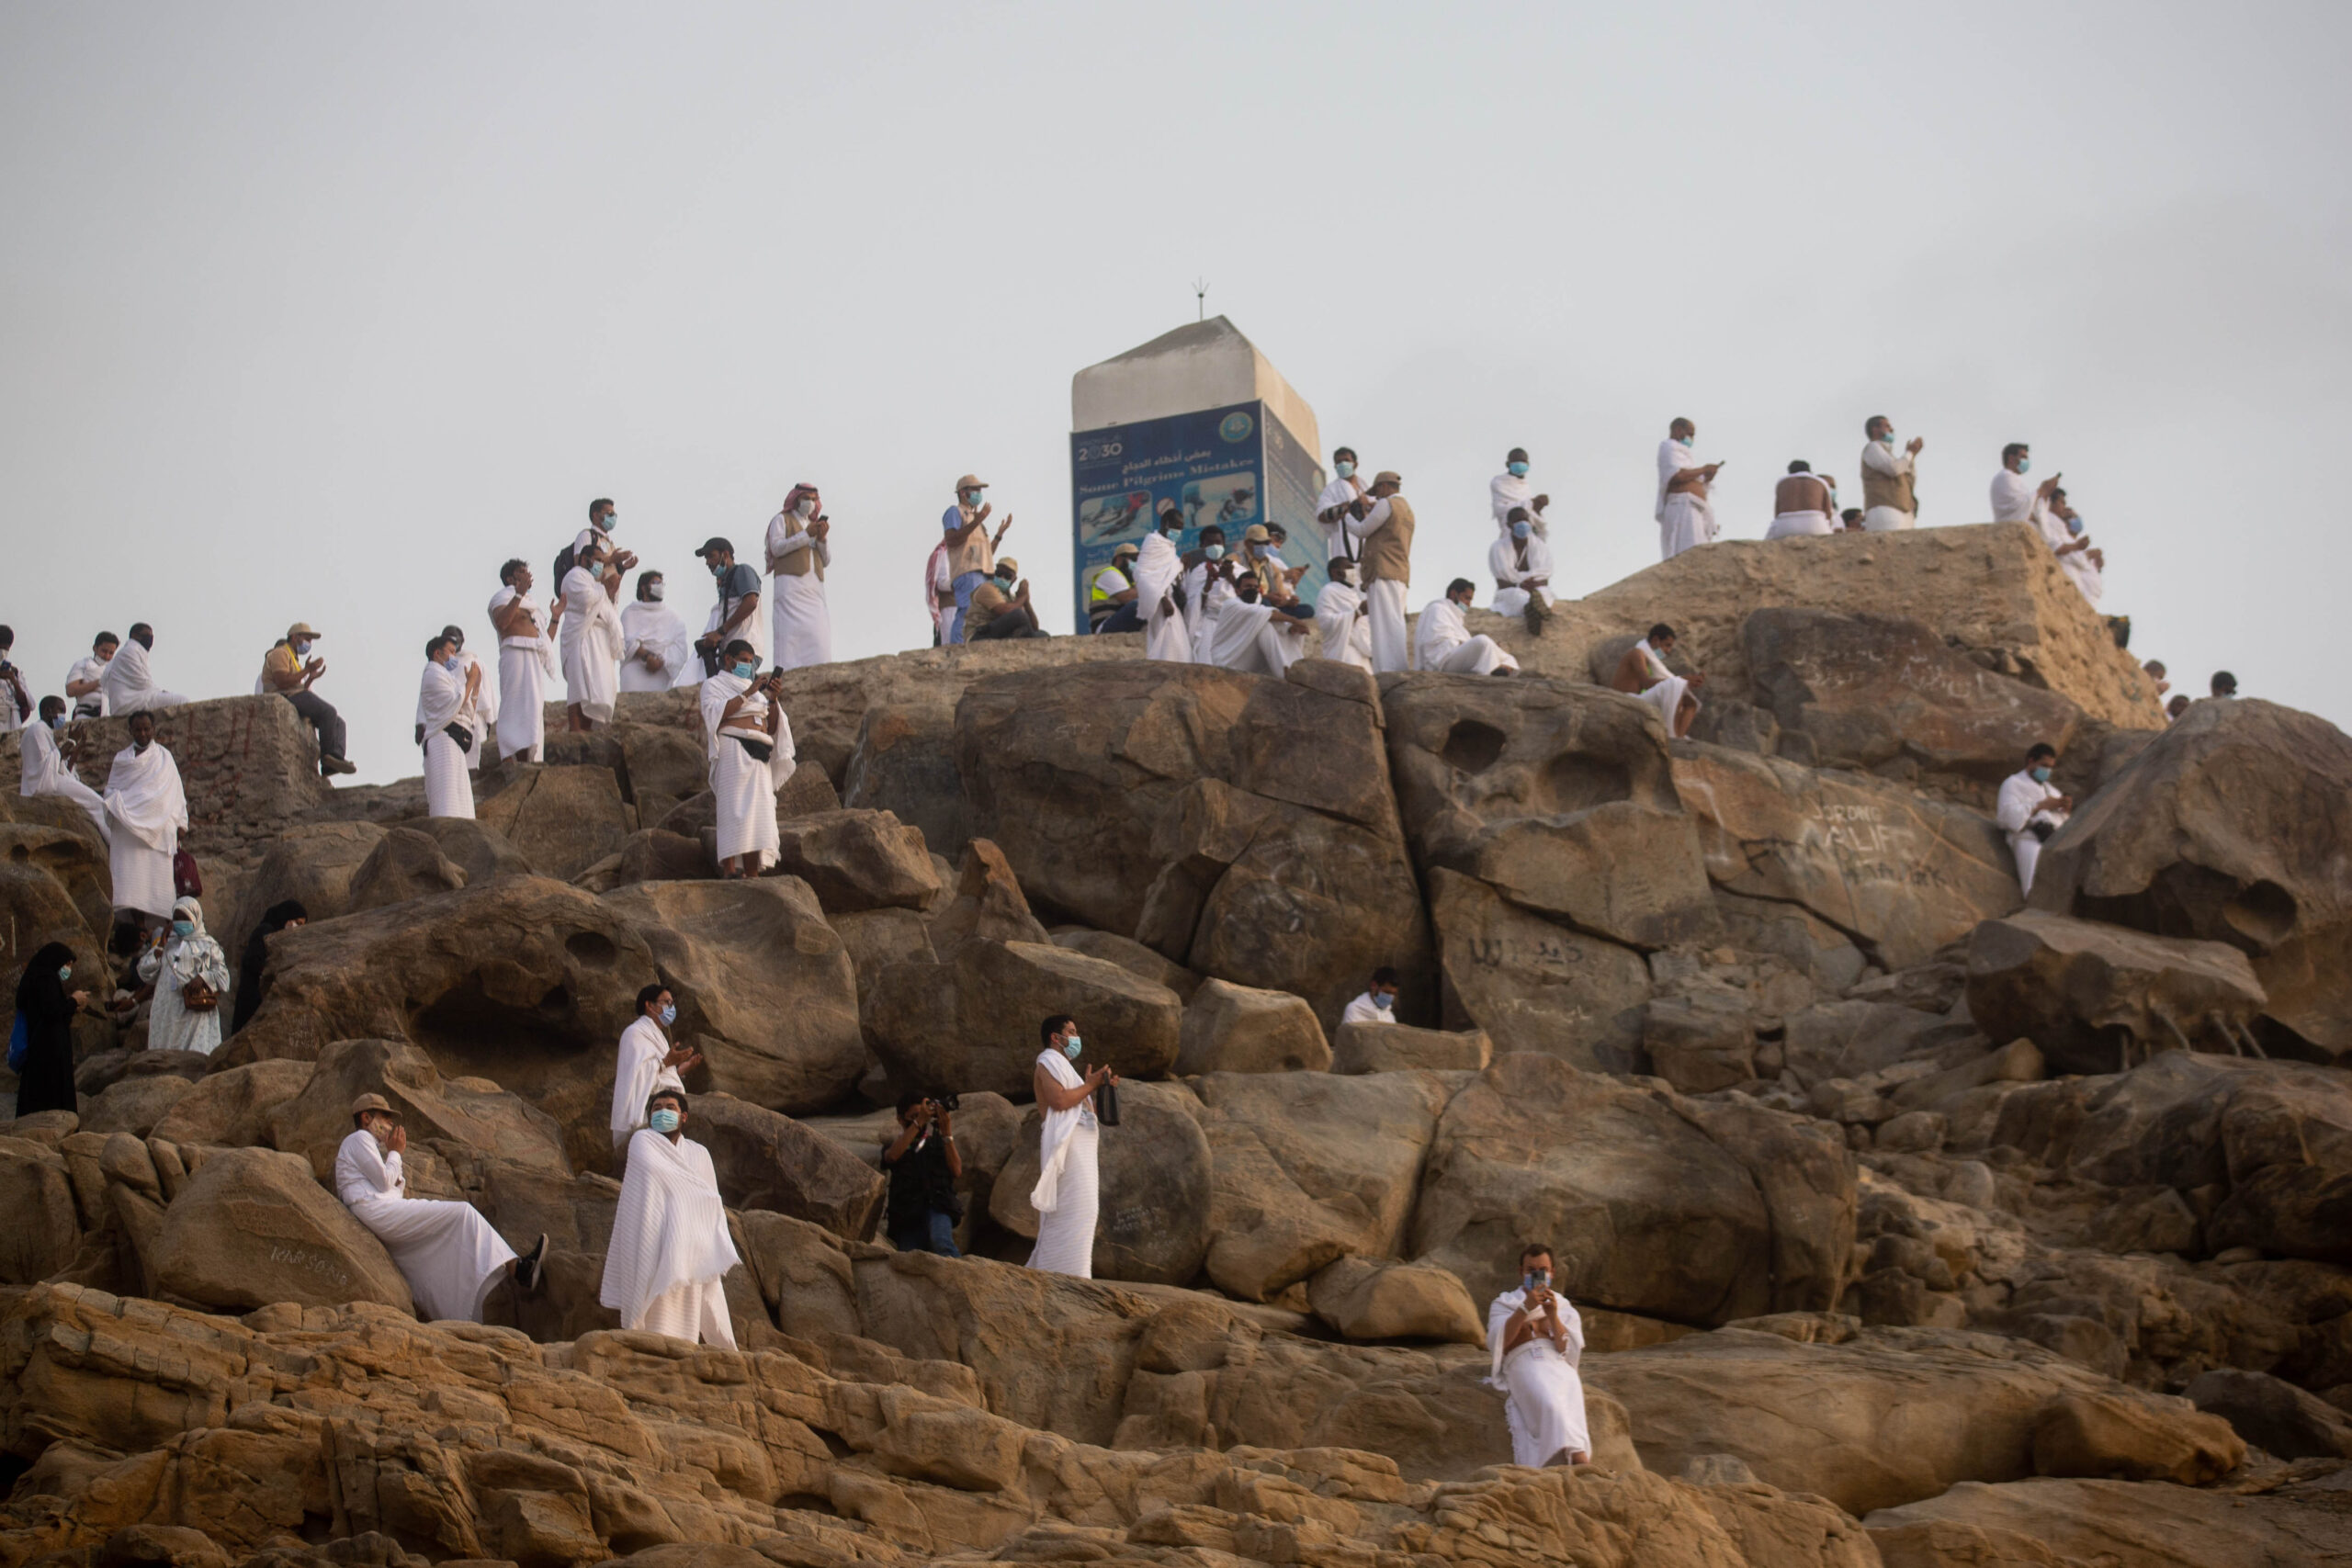 Haji1441 – WHO puji Arab Saudi atas penyelenggaraan haji yang aman